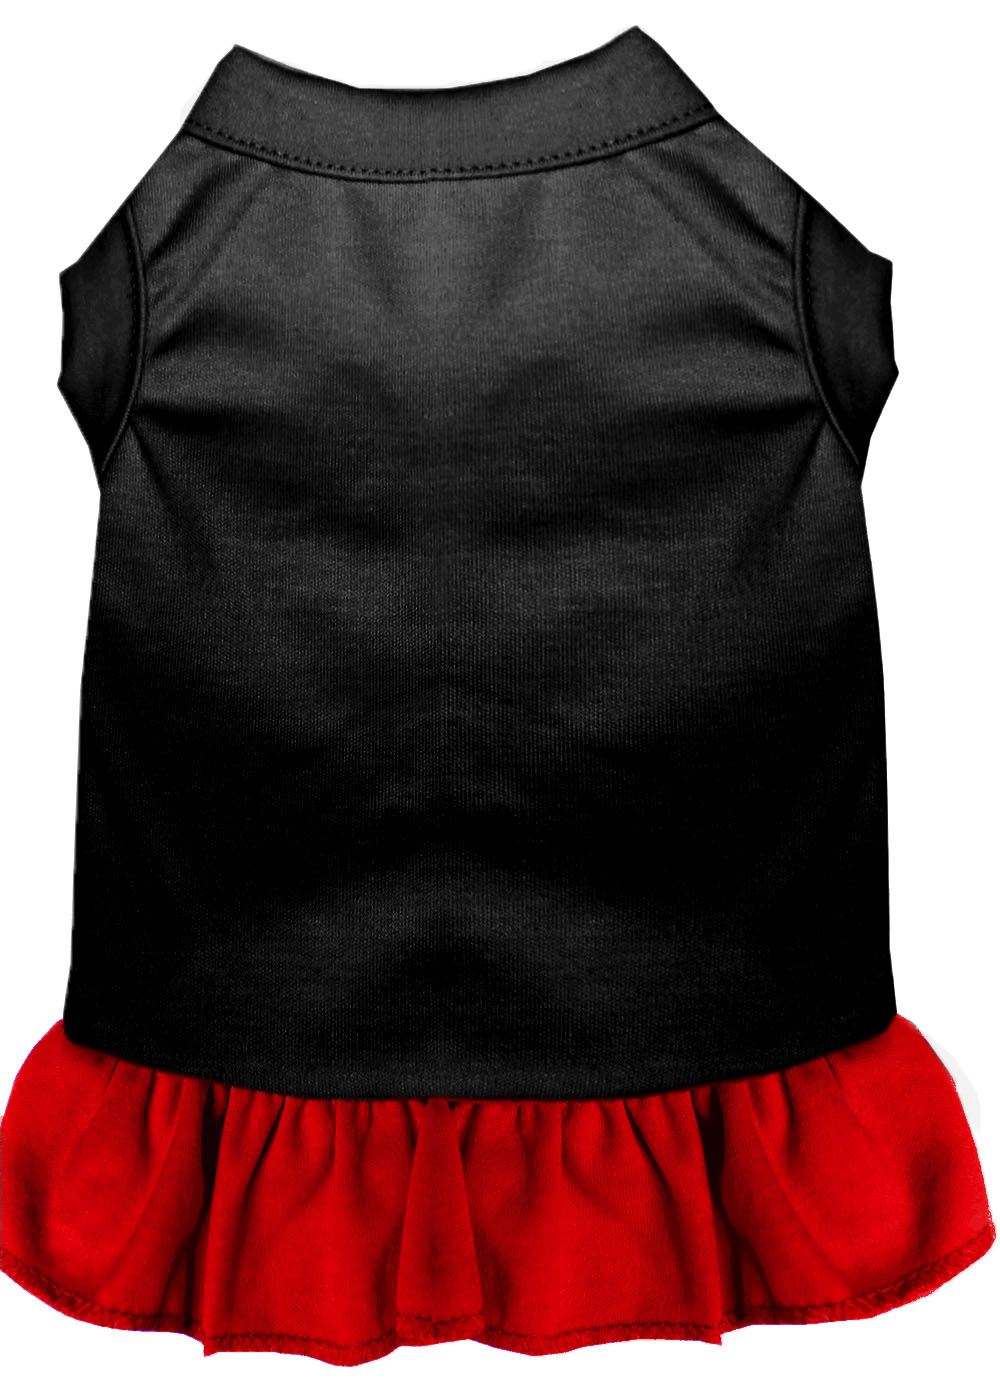 Plain Pet Dress Black with Red Med